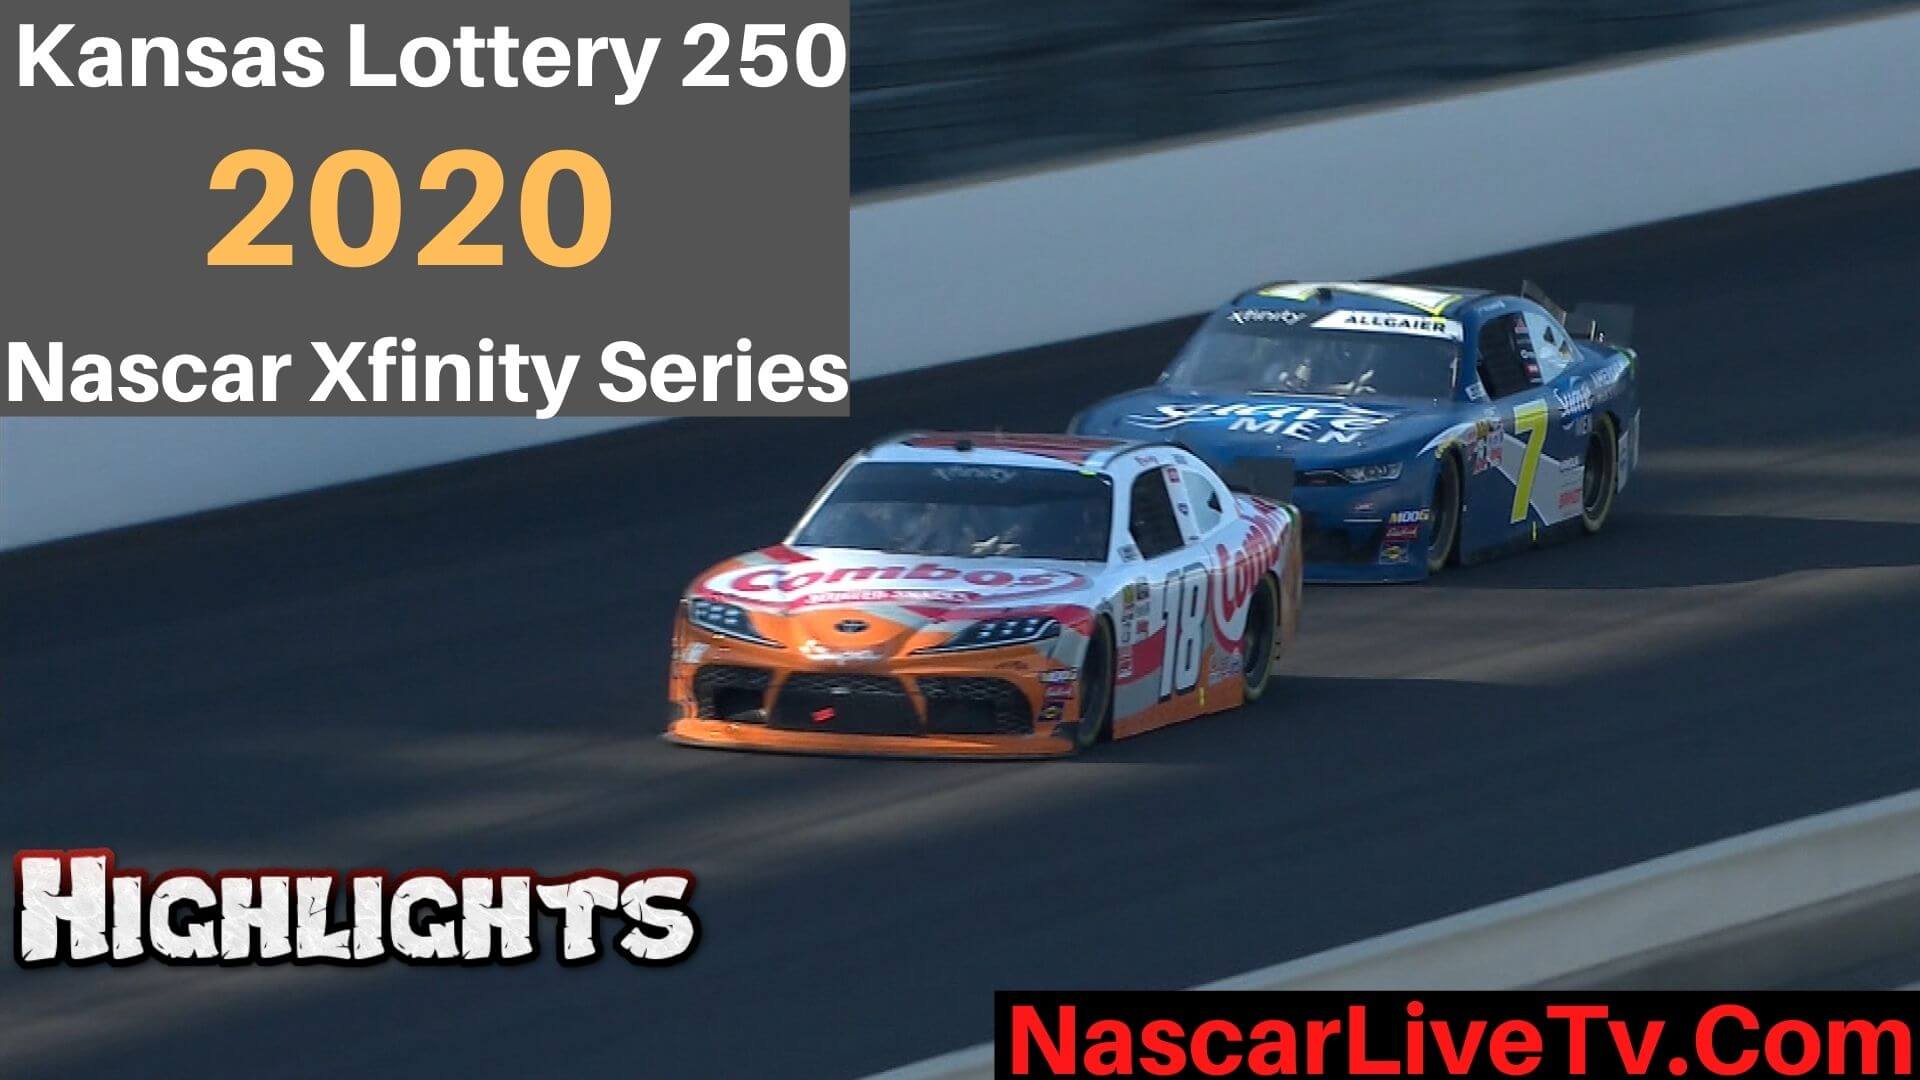 Kansas Lottery 250 Highlights Nascar Xfinity Series 2020